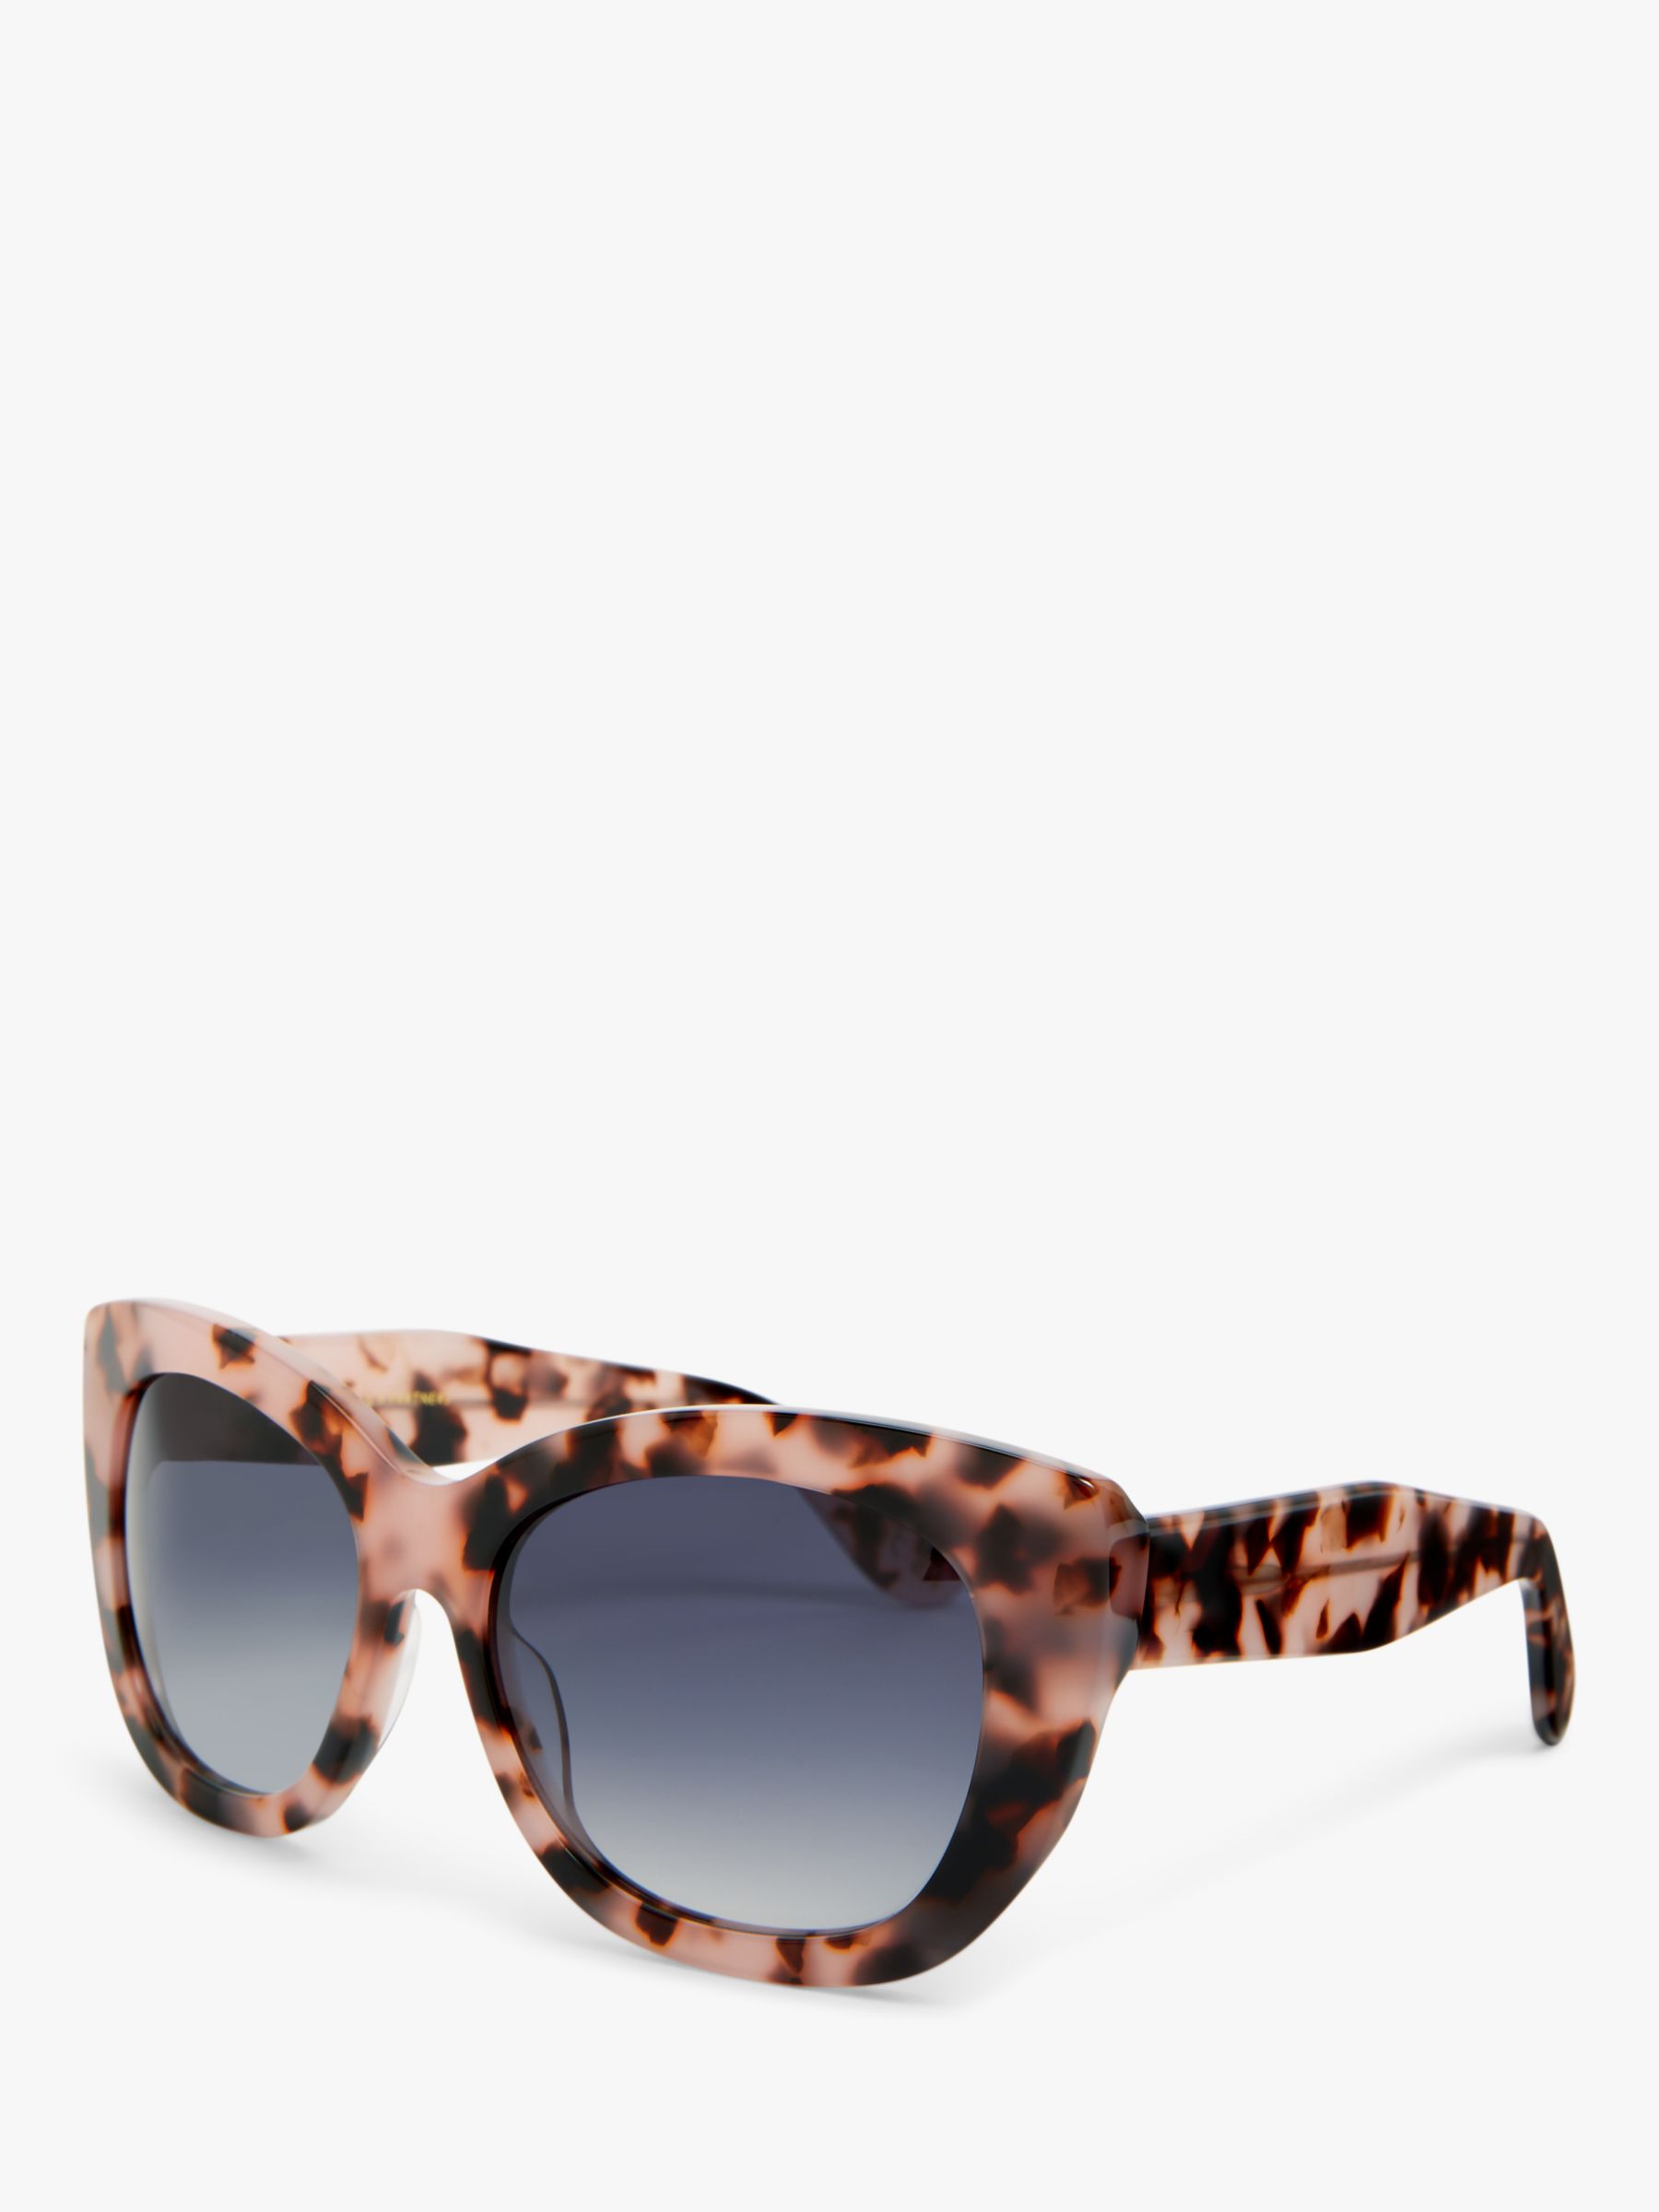 John Lewis Women's Cat's Eye Sunglasses, Tortoise/Pink